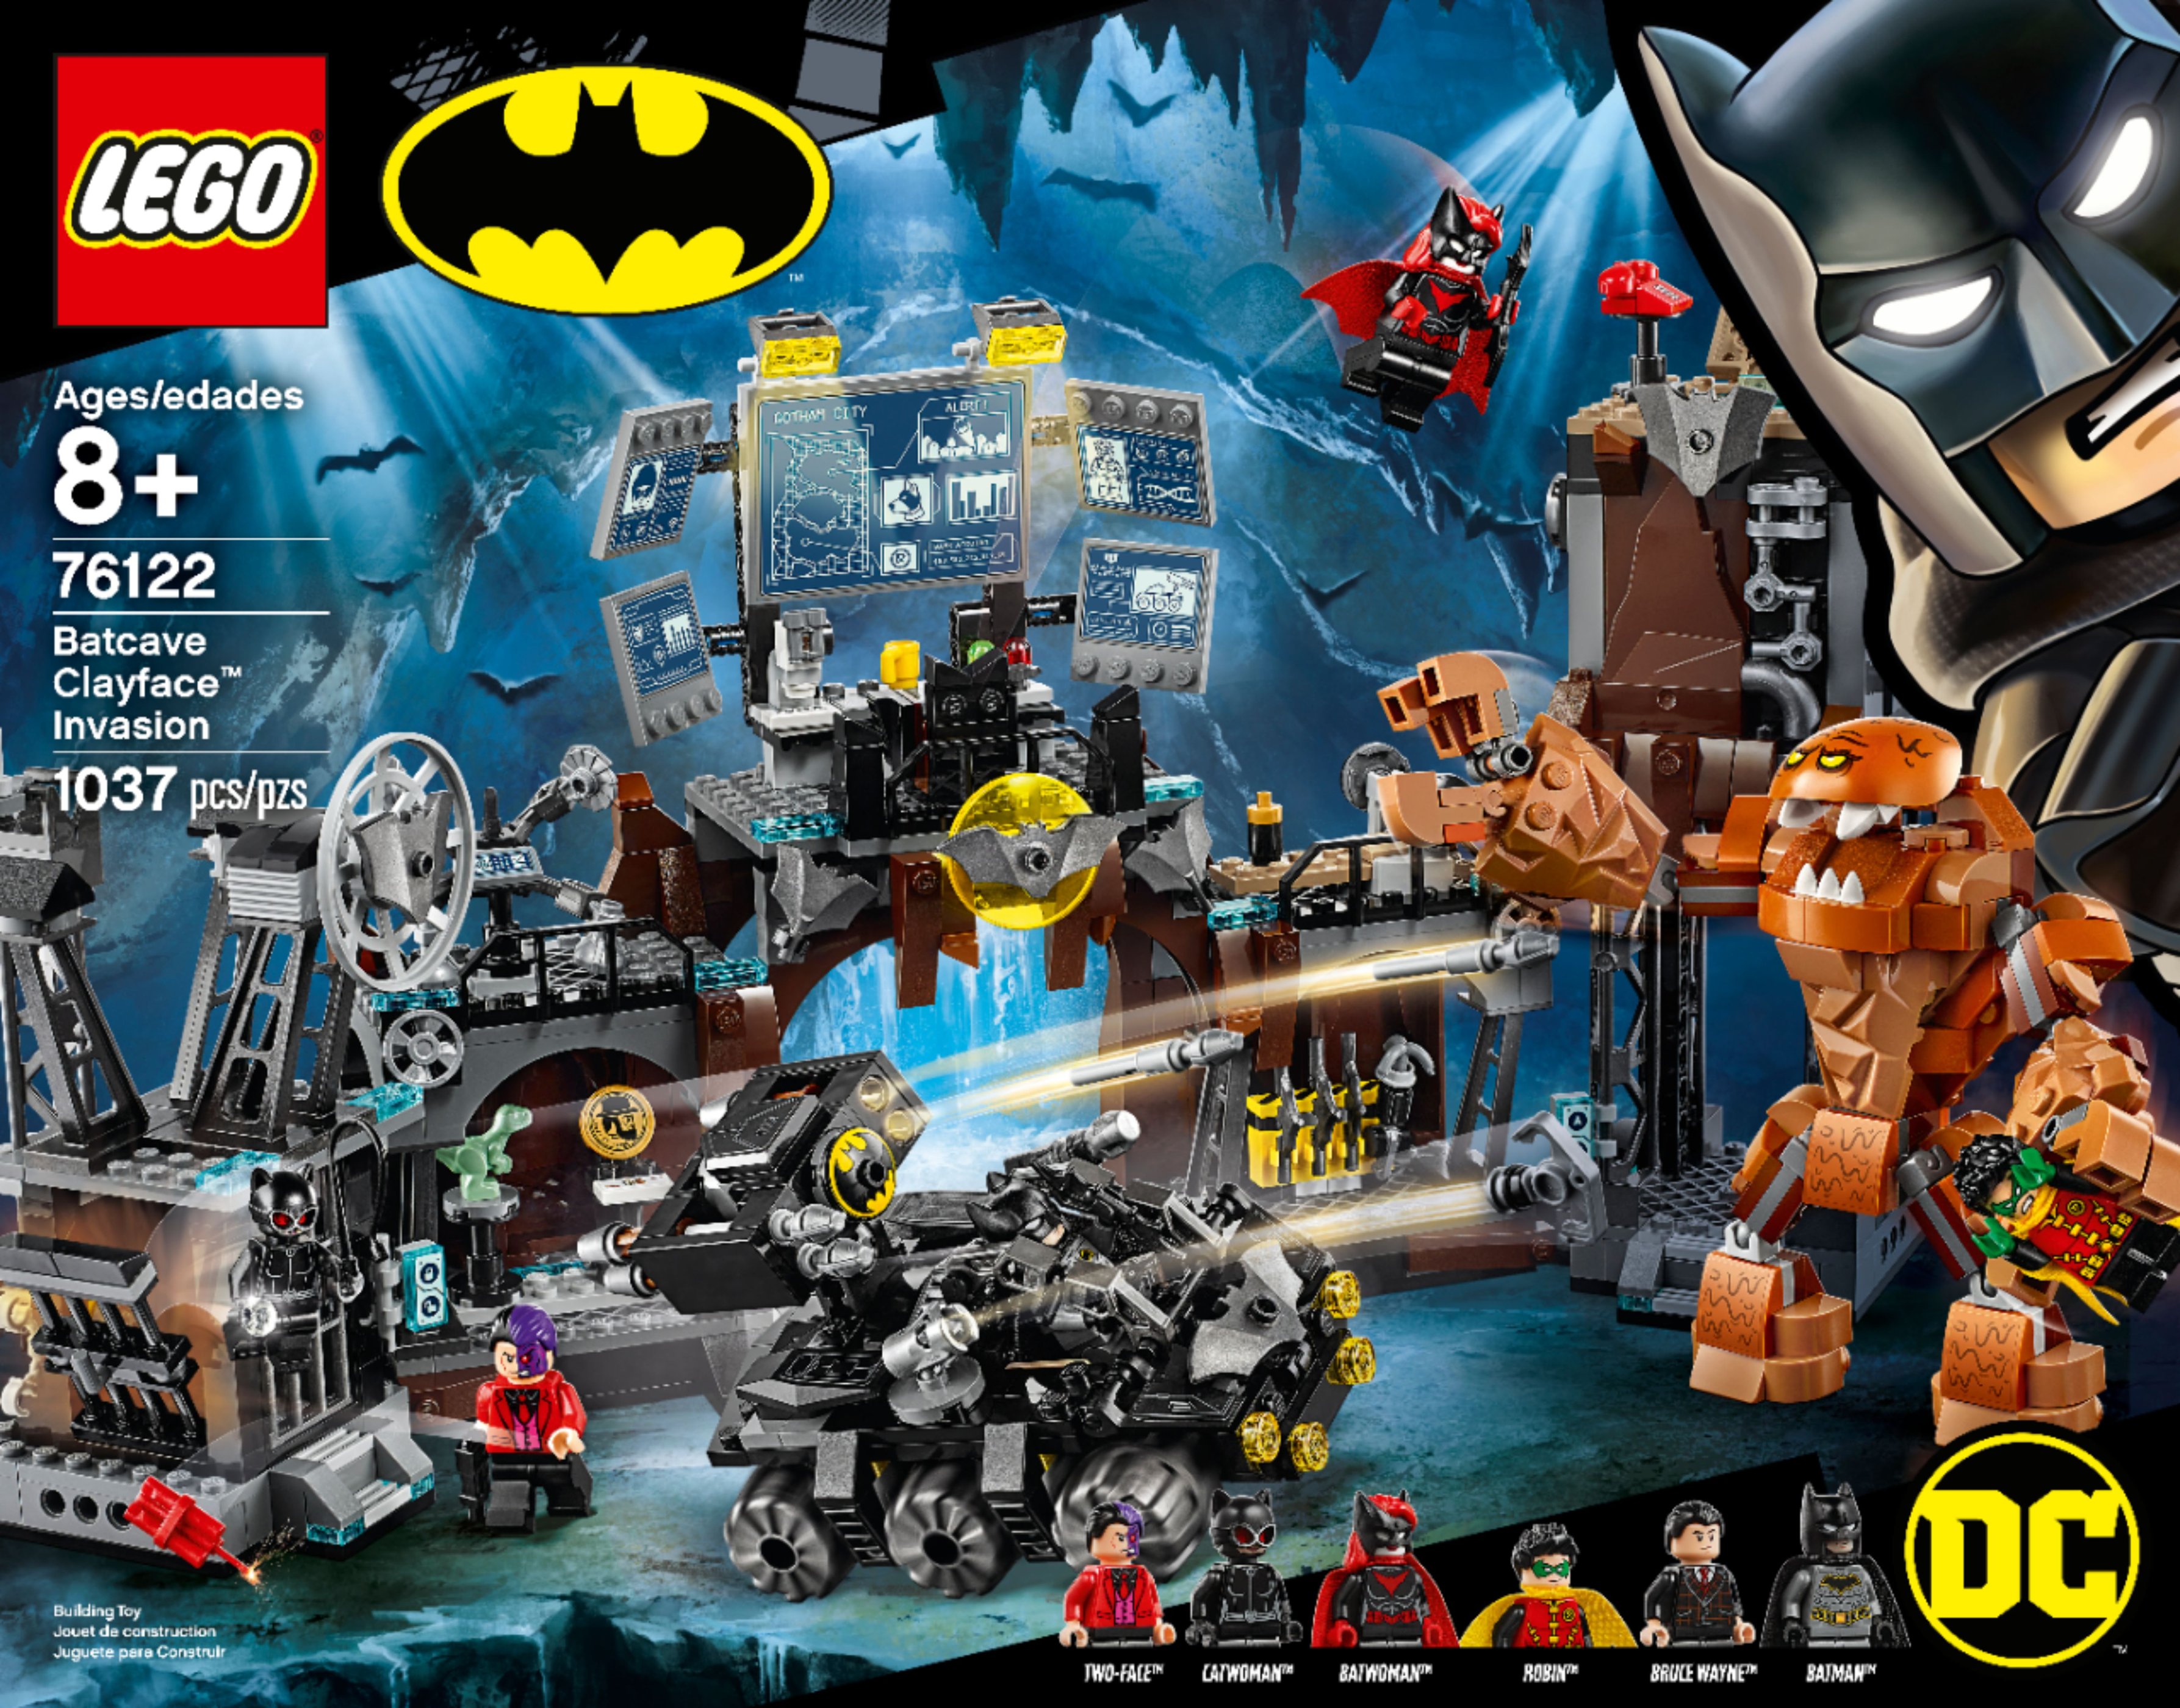 Batman Roblox Batcave Tycoon Home Games Codes For Robux Free Youtube - lego batman roblox